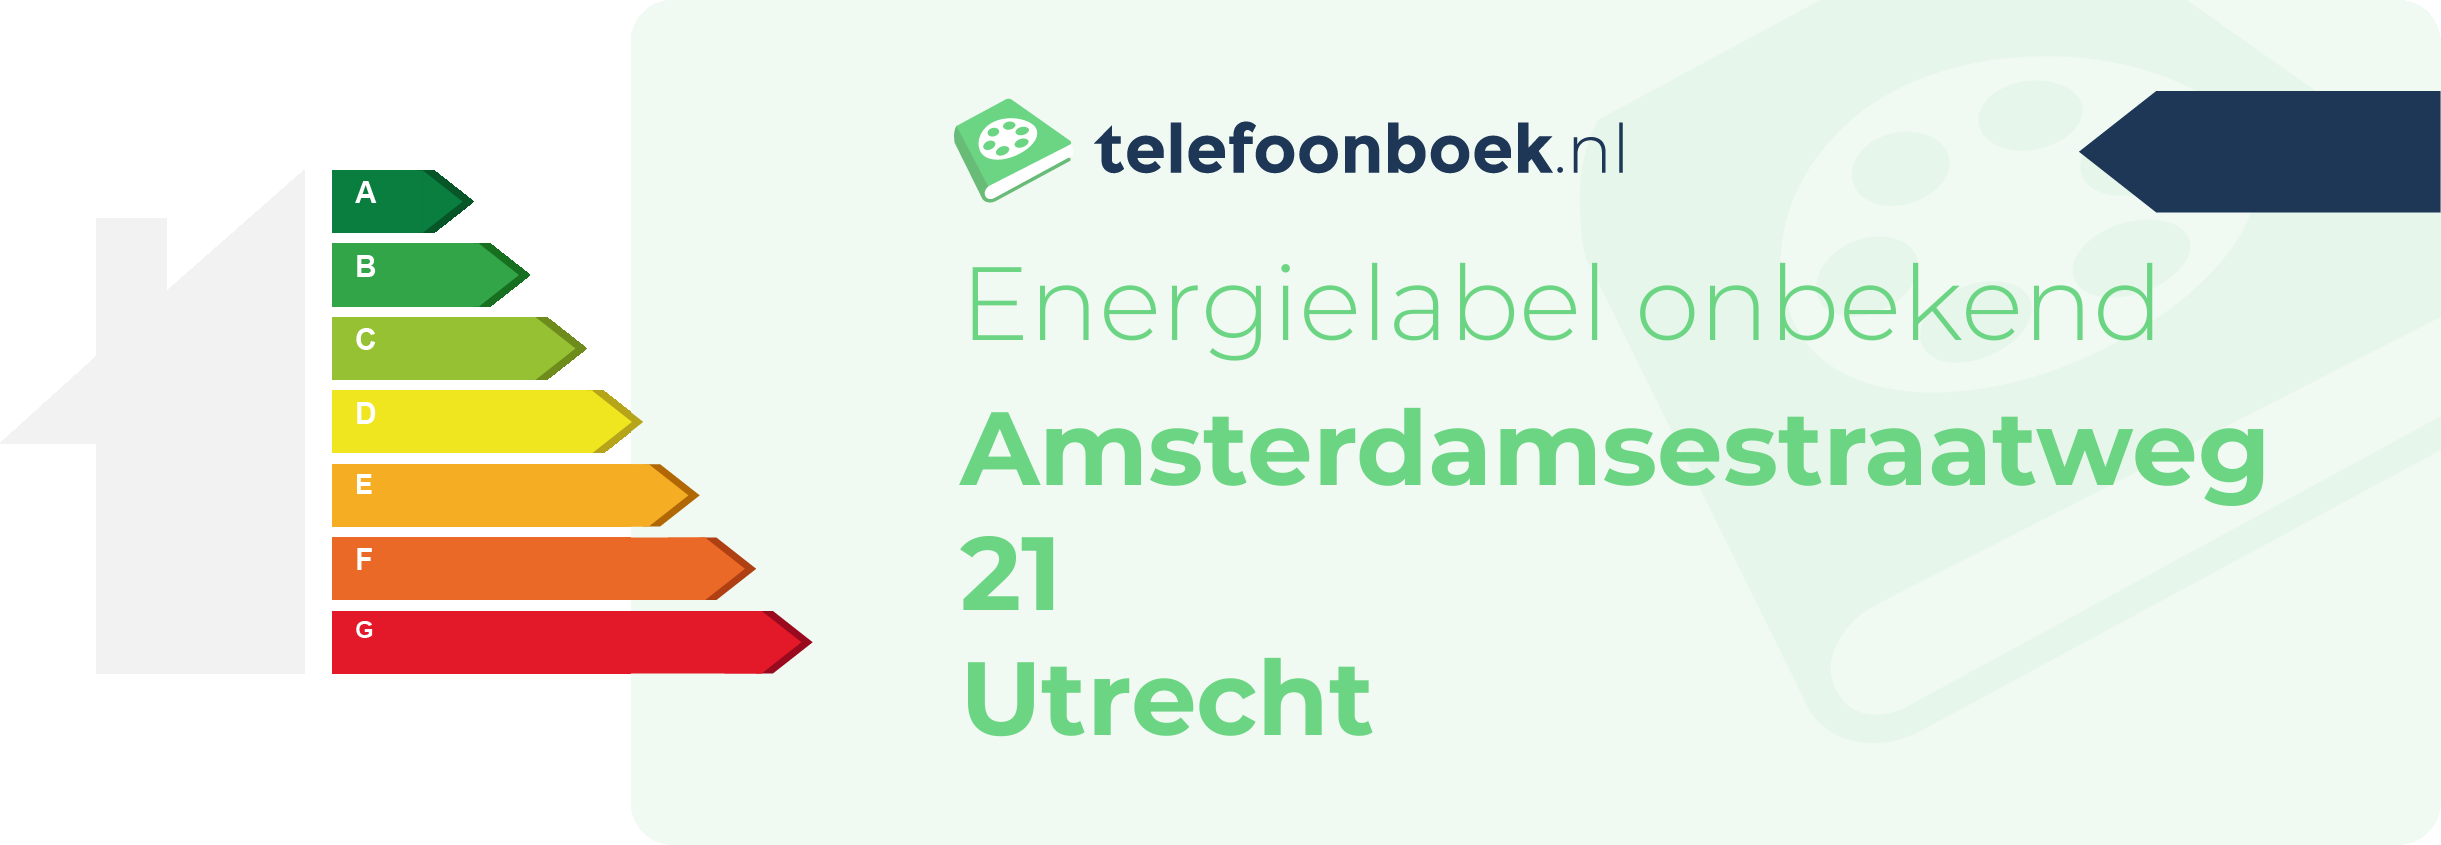 Energielabel Amsterdamsestraatweg 21 Utrecht